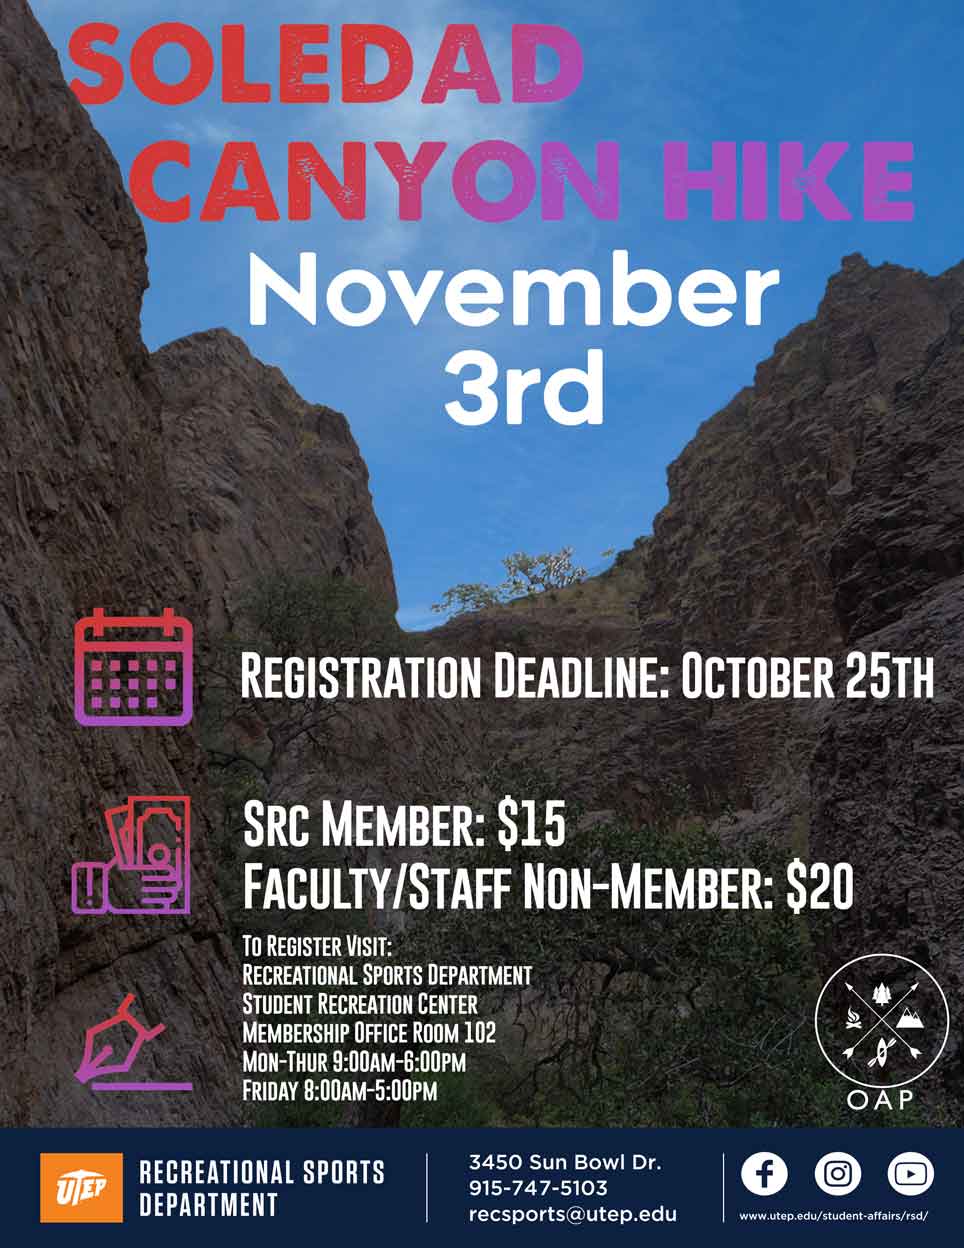 Soledad Canyon Hike Flyer, information below